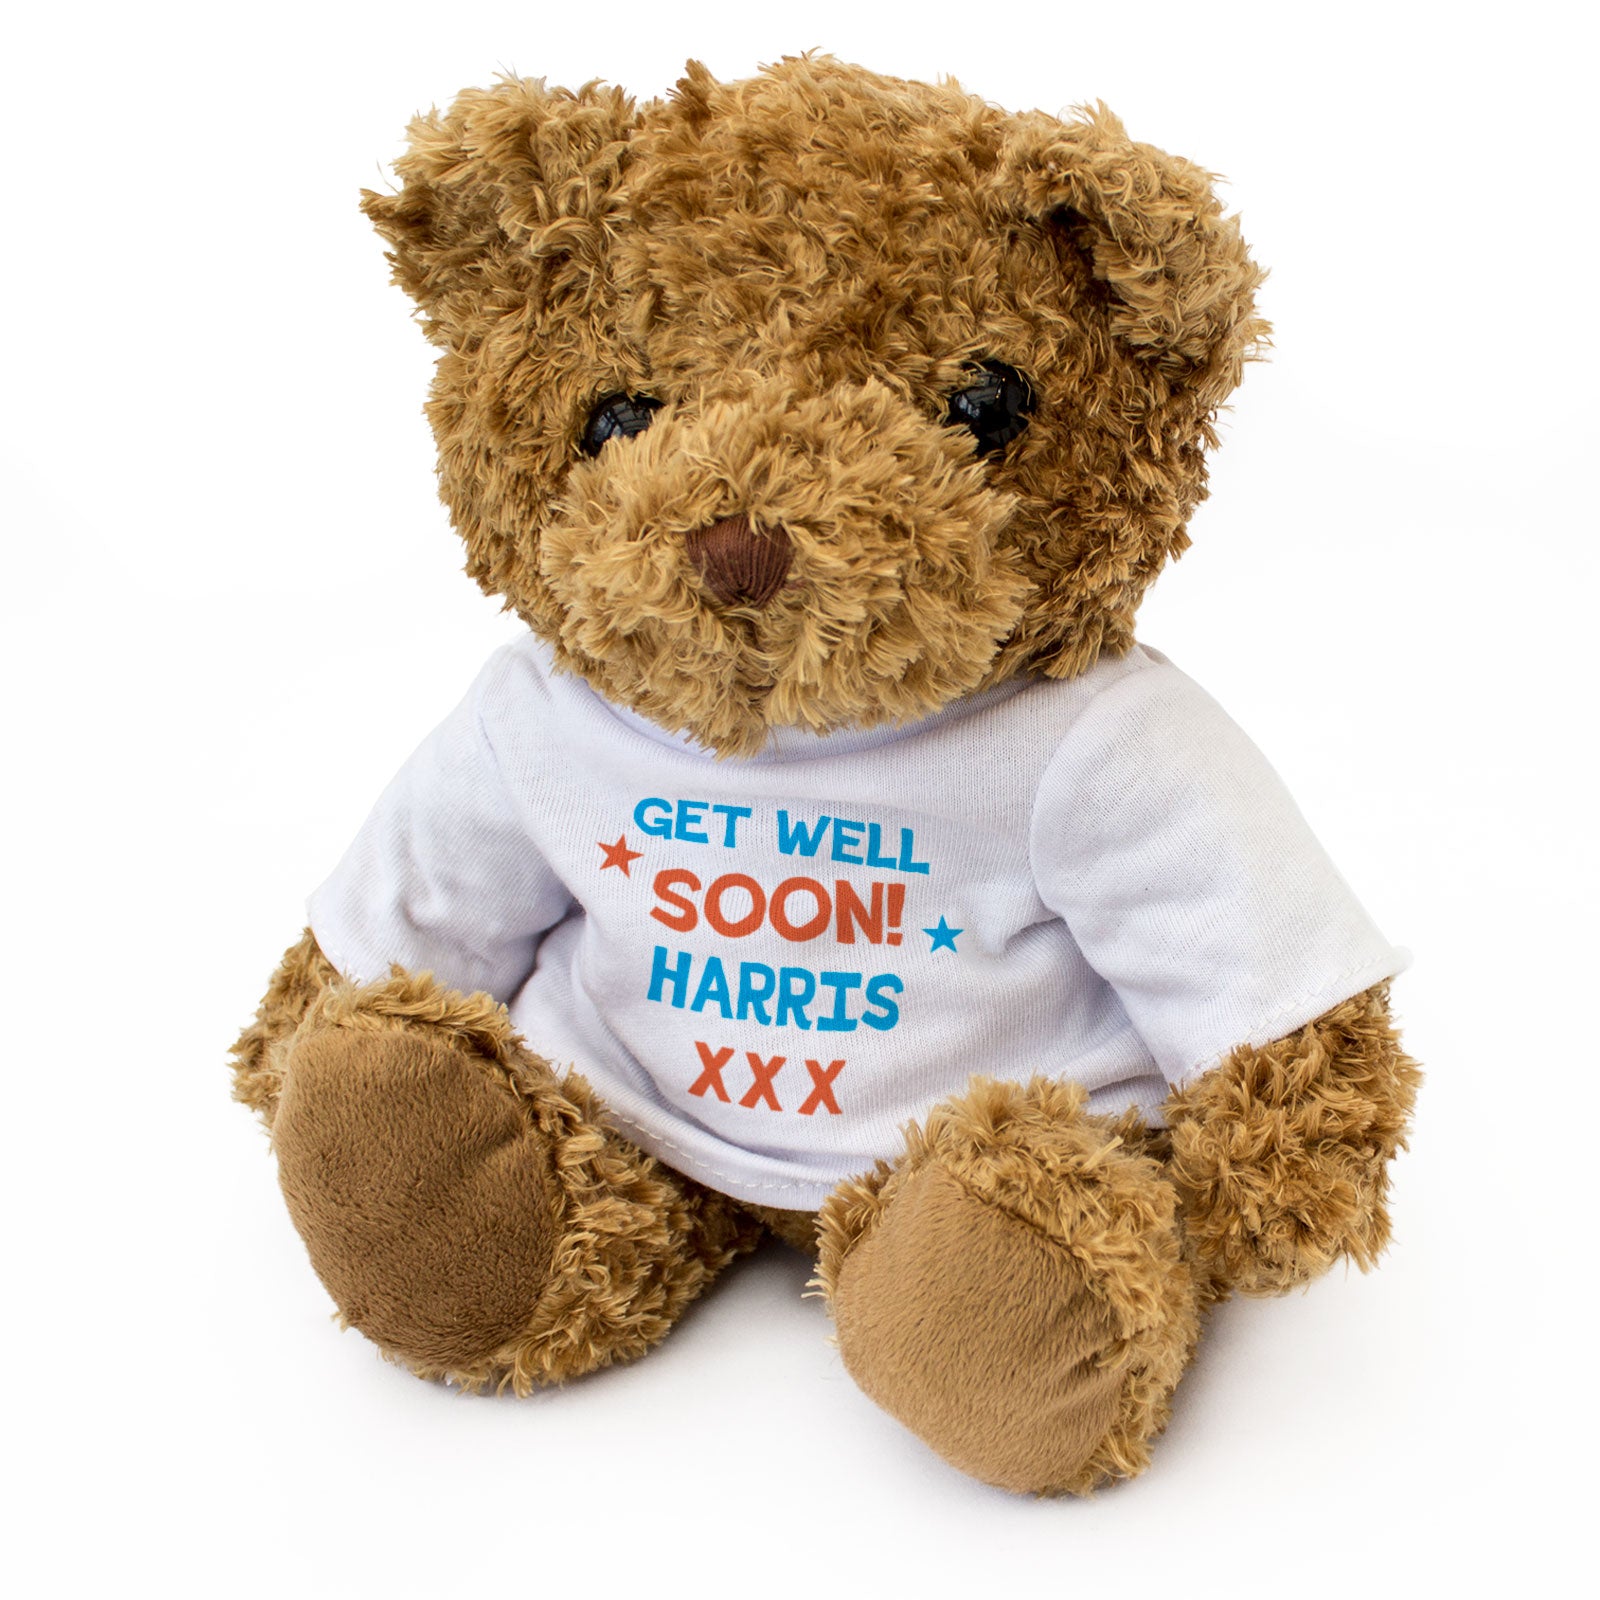 Get Well Soon Harris - Teddy Bear